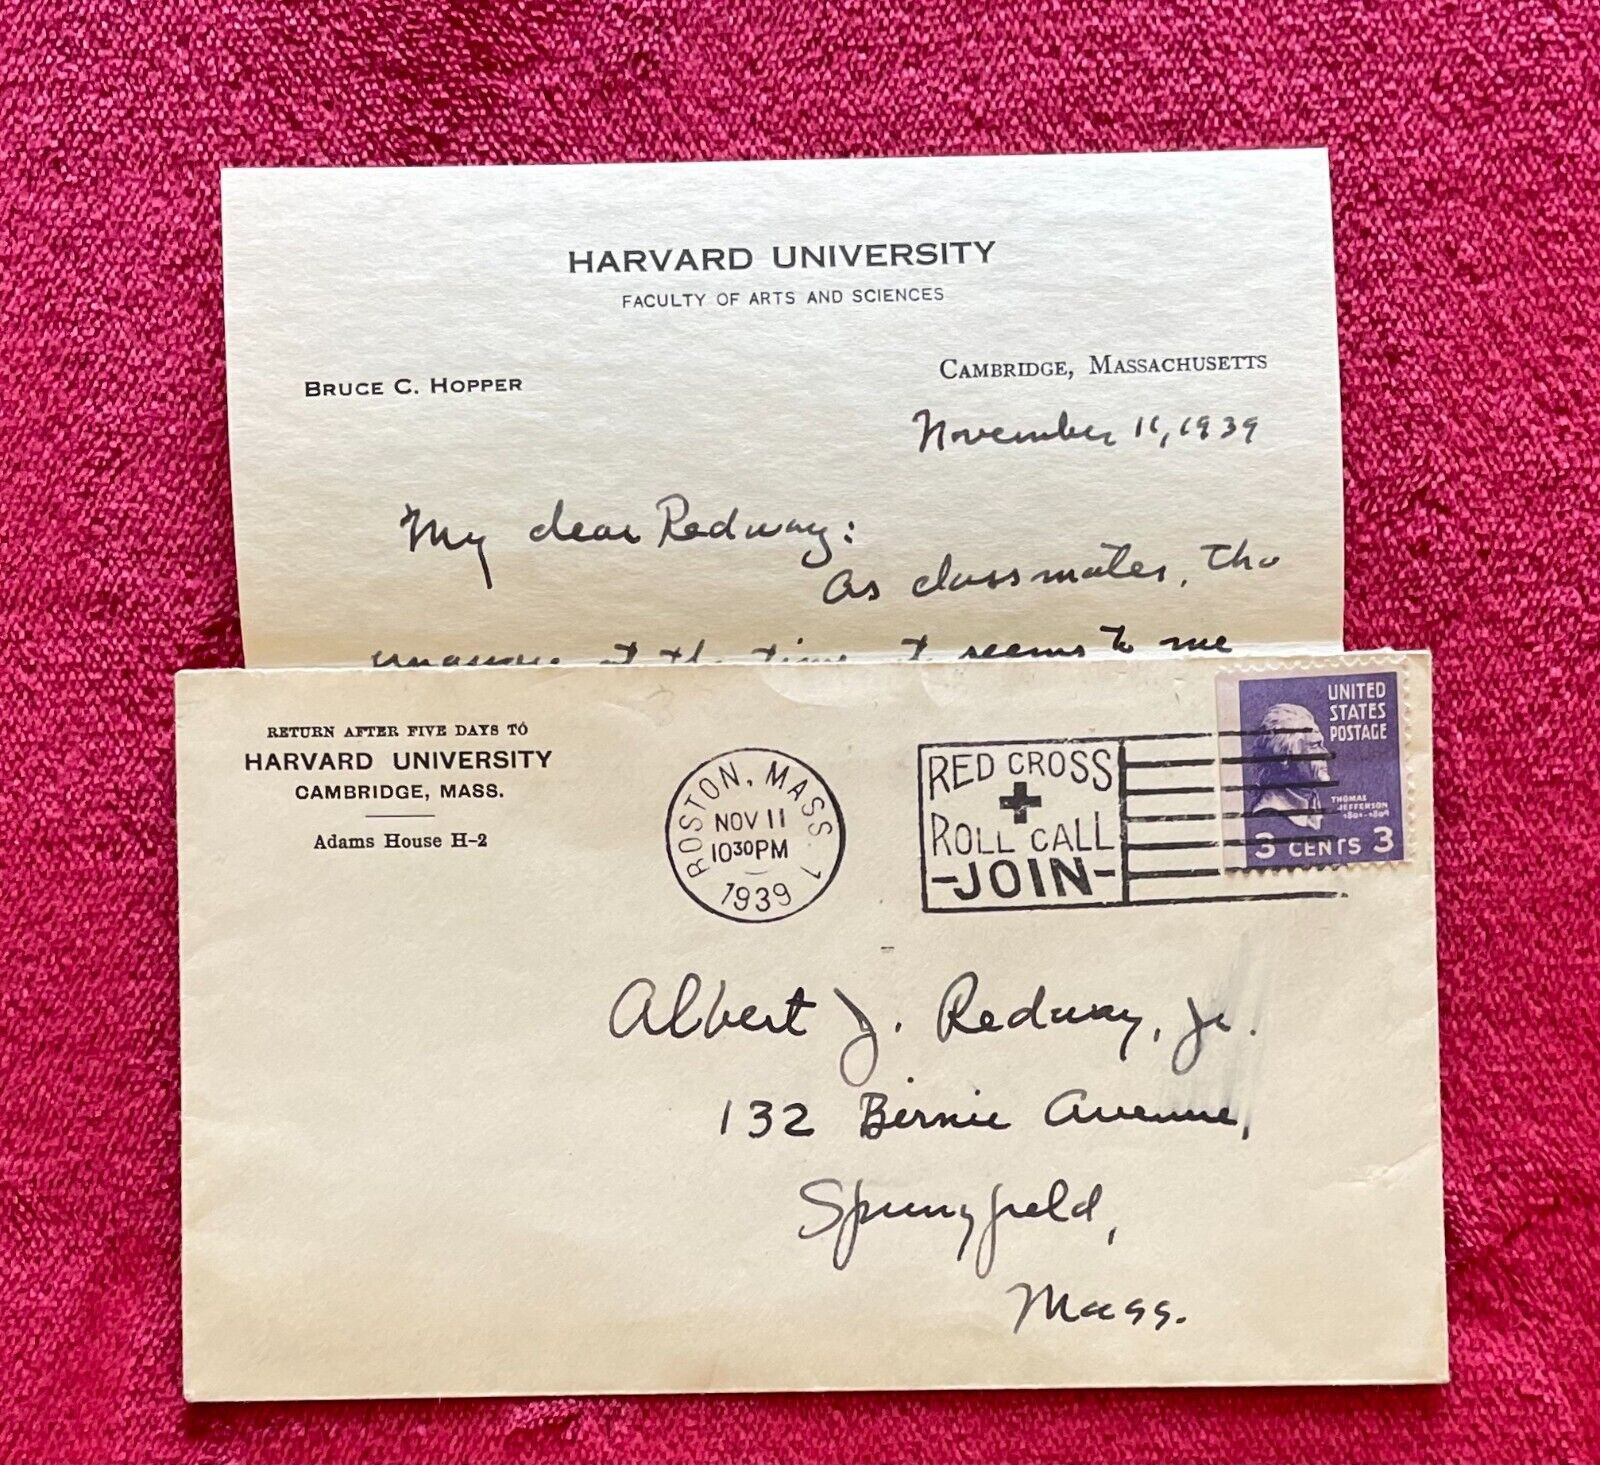 BRUCE C. HOPPER HARVARD PROF. - 1939 LETTER -HARVARD ARTS & SCIENCES FUND & MORE